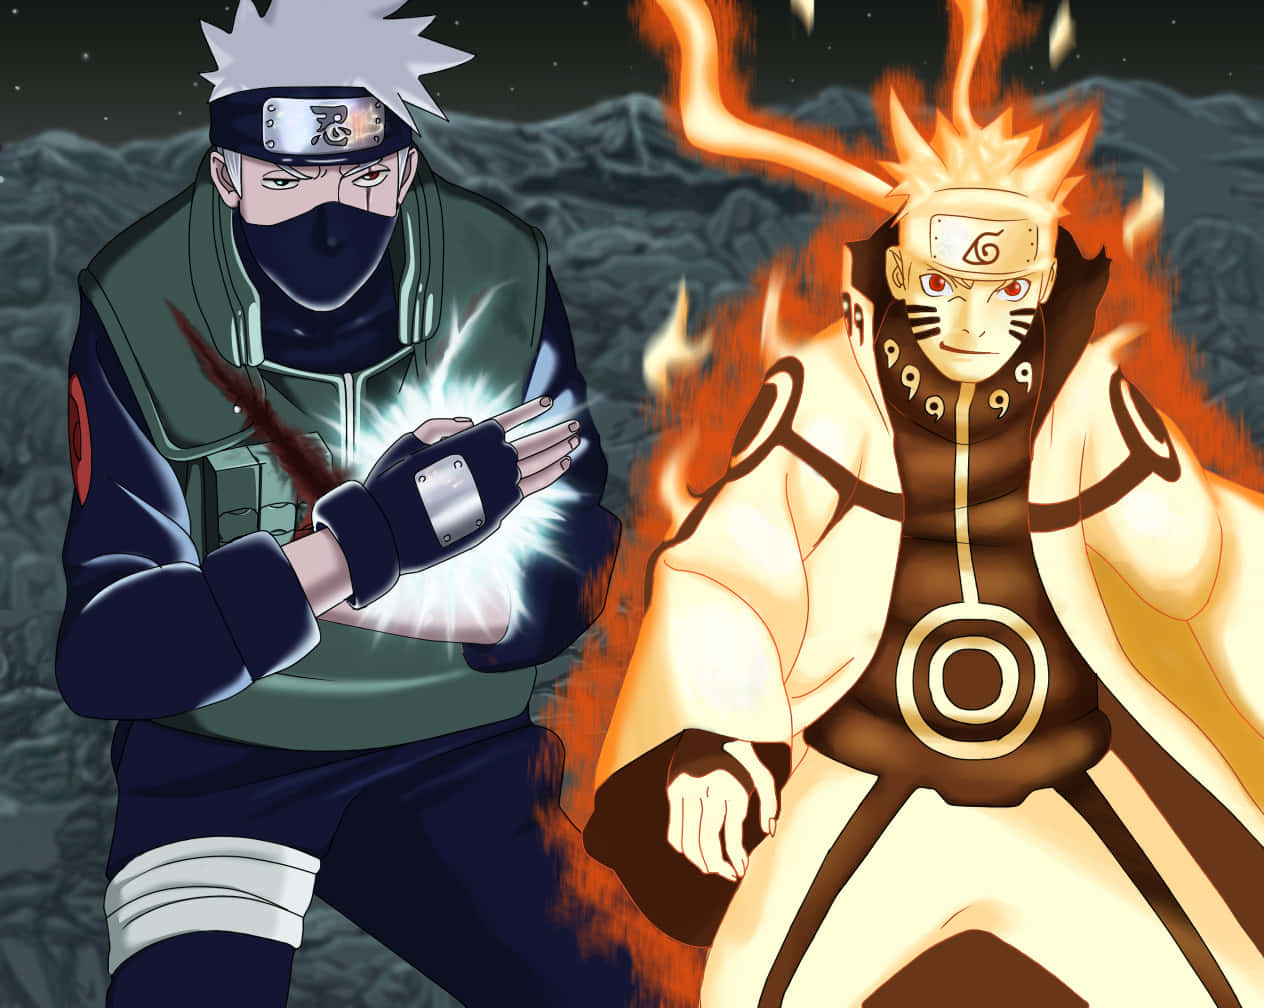 Kakashi and Naruto in action mode Wallpaper